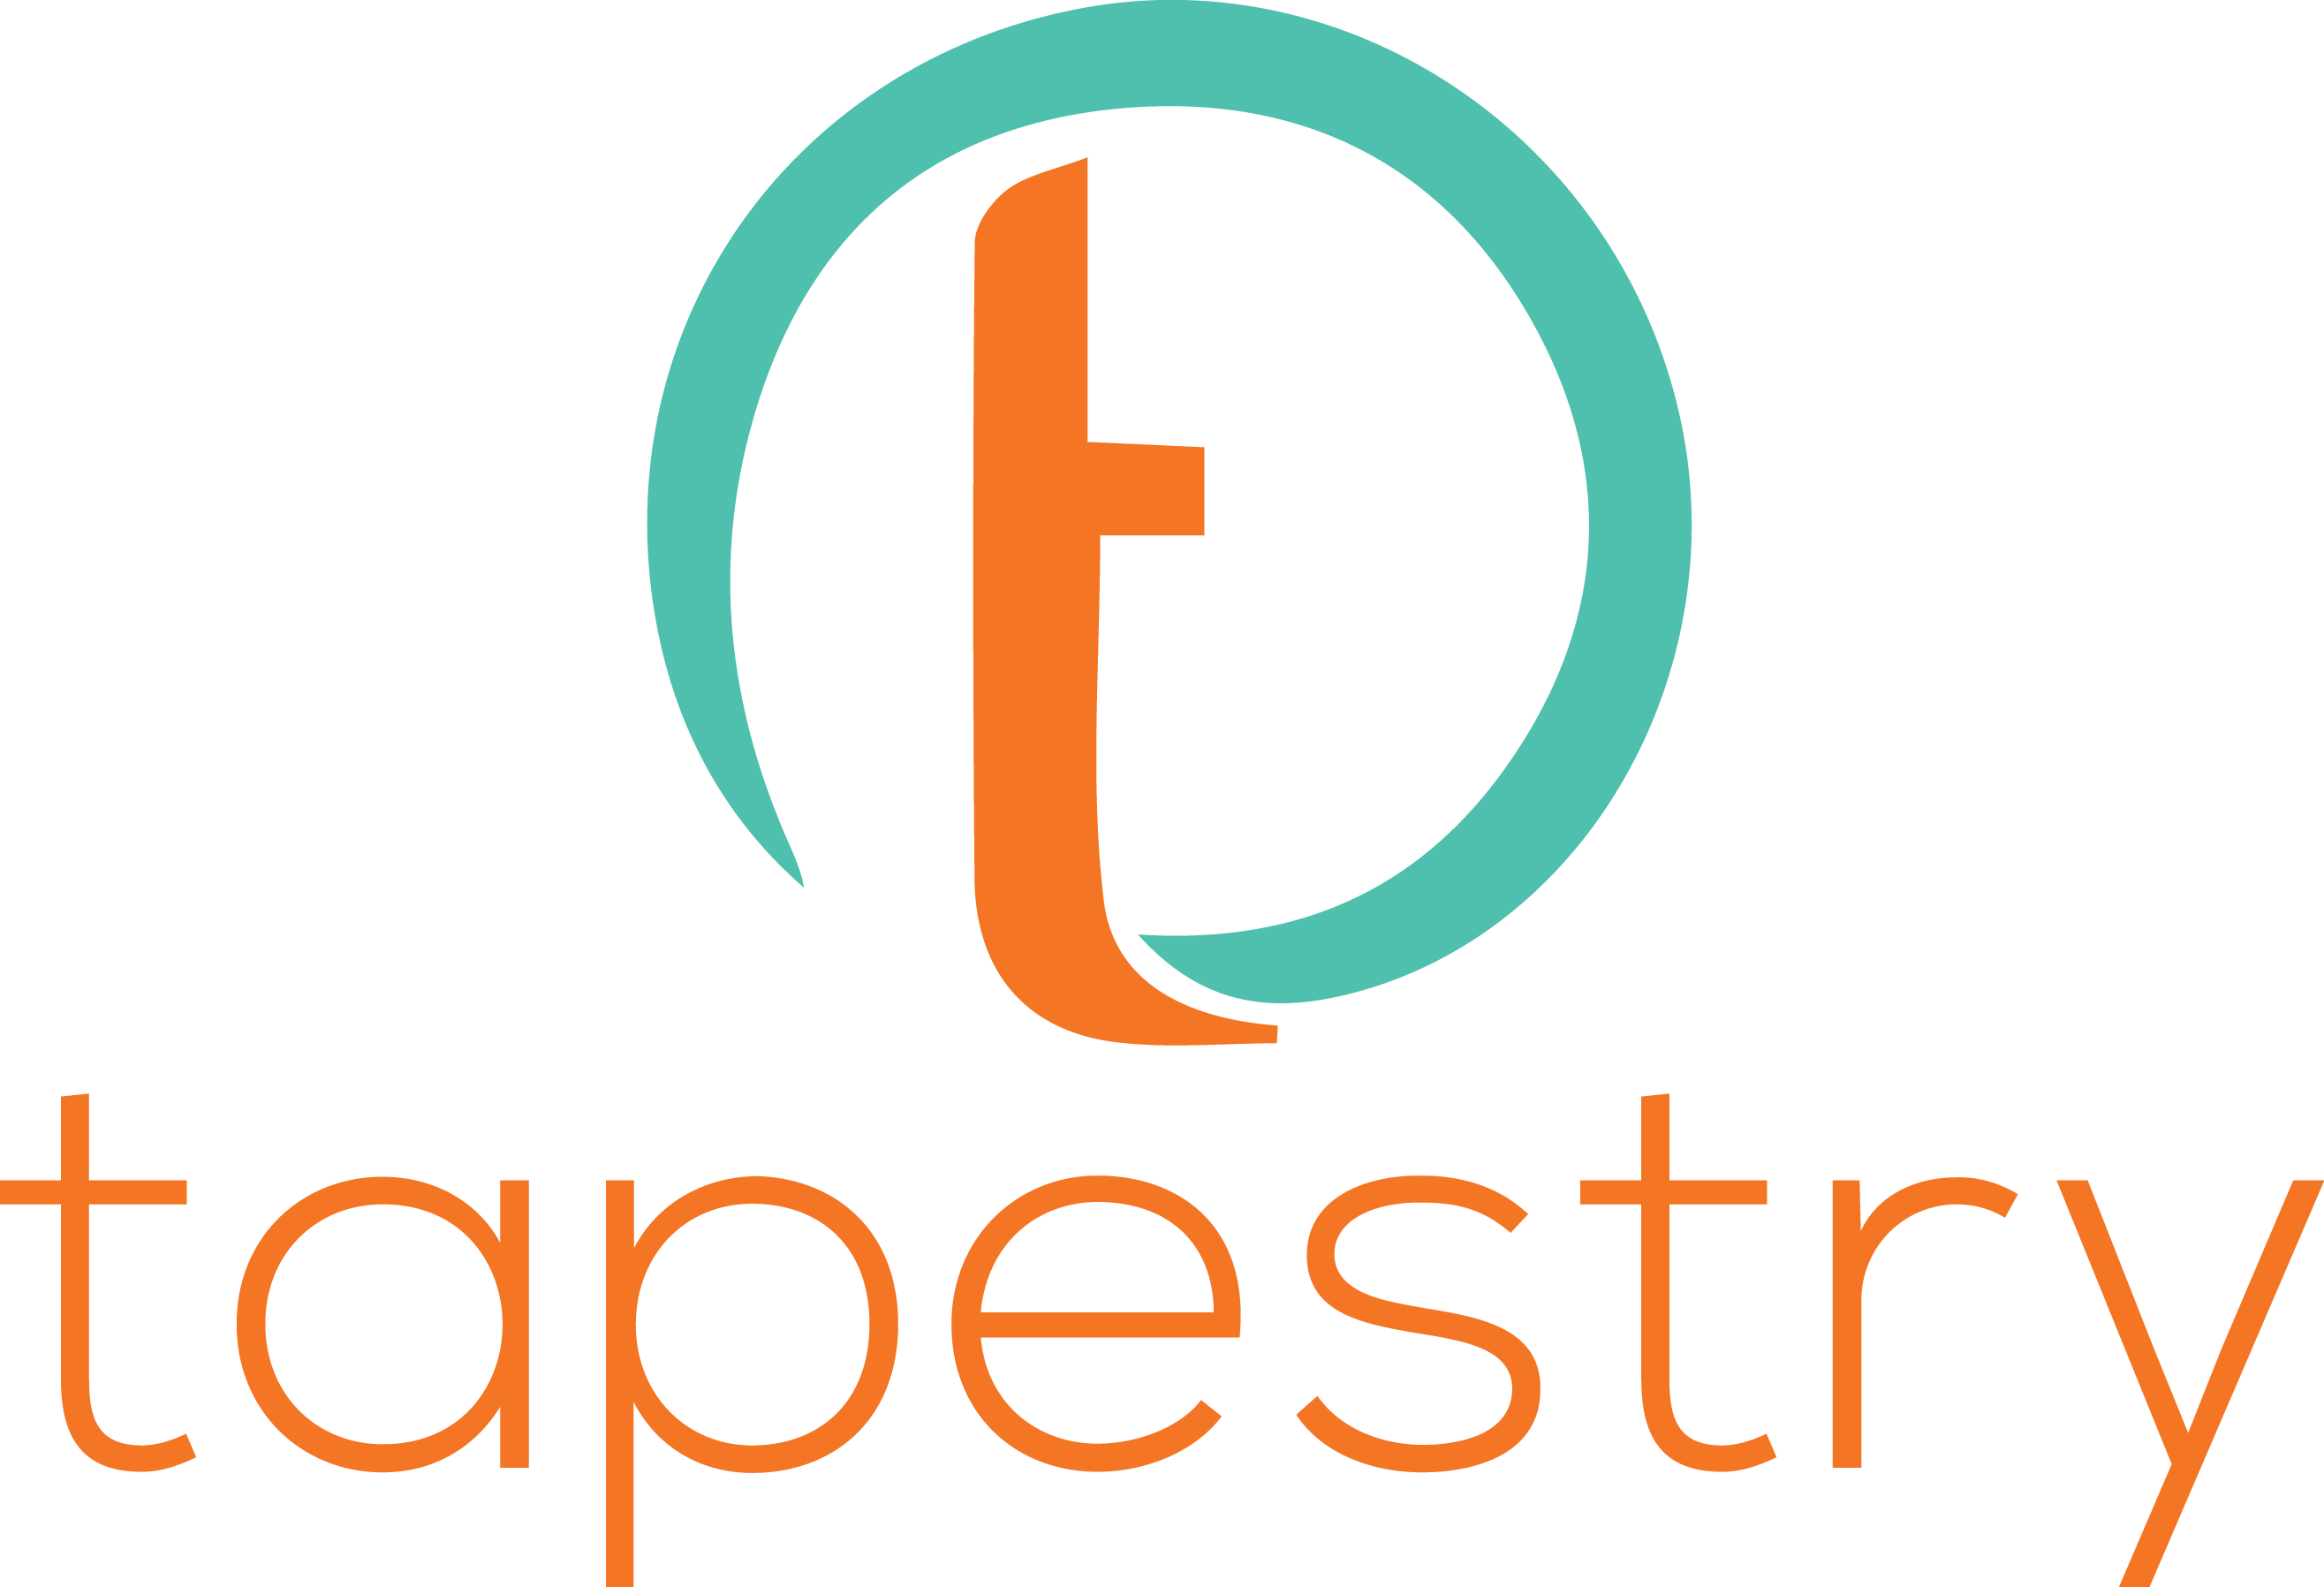 Tapestry logo